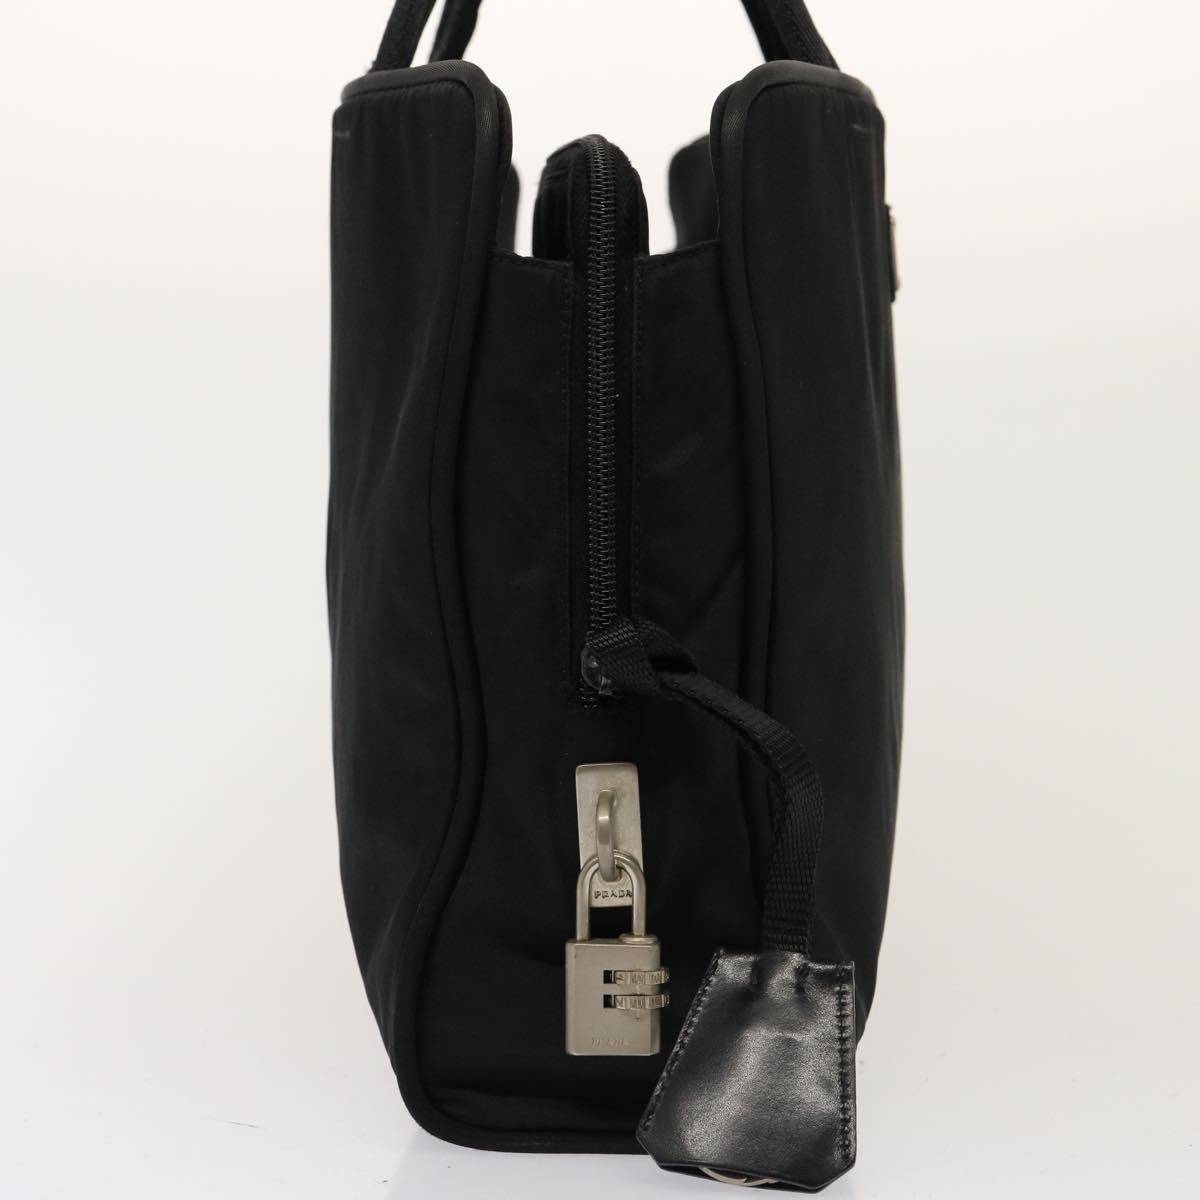 PRADA Business Bag Nylon Black Auth 75642